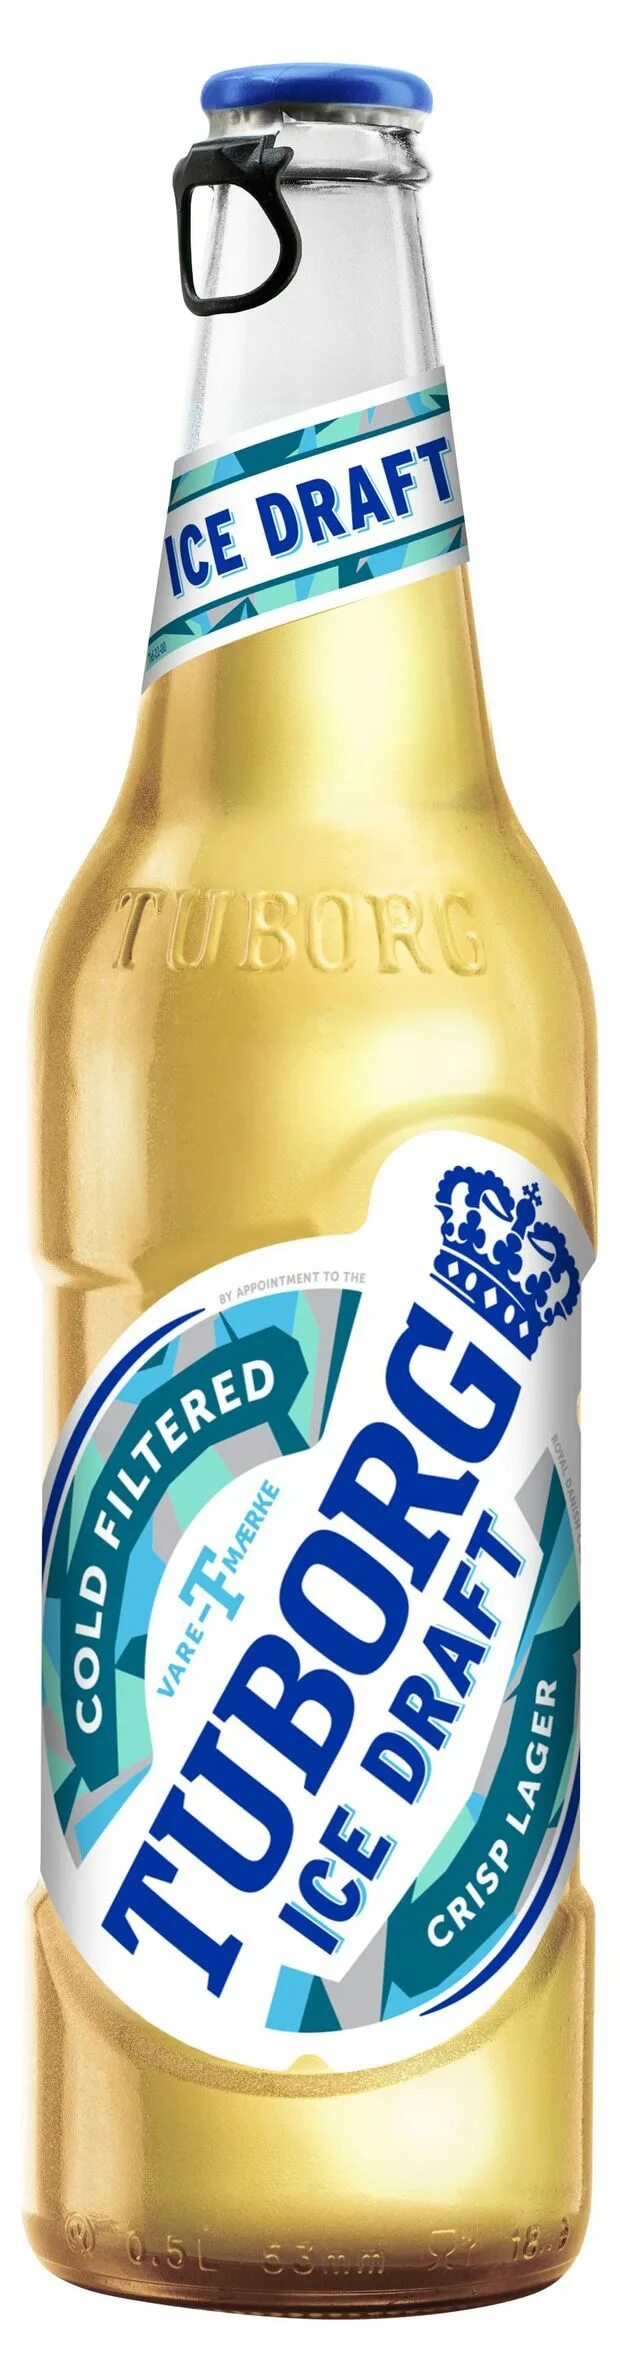 Айс драфт. Пиво туборг айс ДРАФТ. Пиво Tuborg Ice Draft 4.2. Туборг пиво светлое 0.48. Пиво туборг светлое.